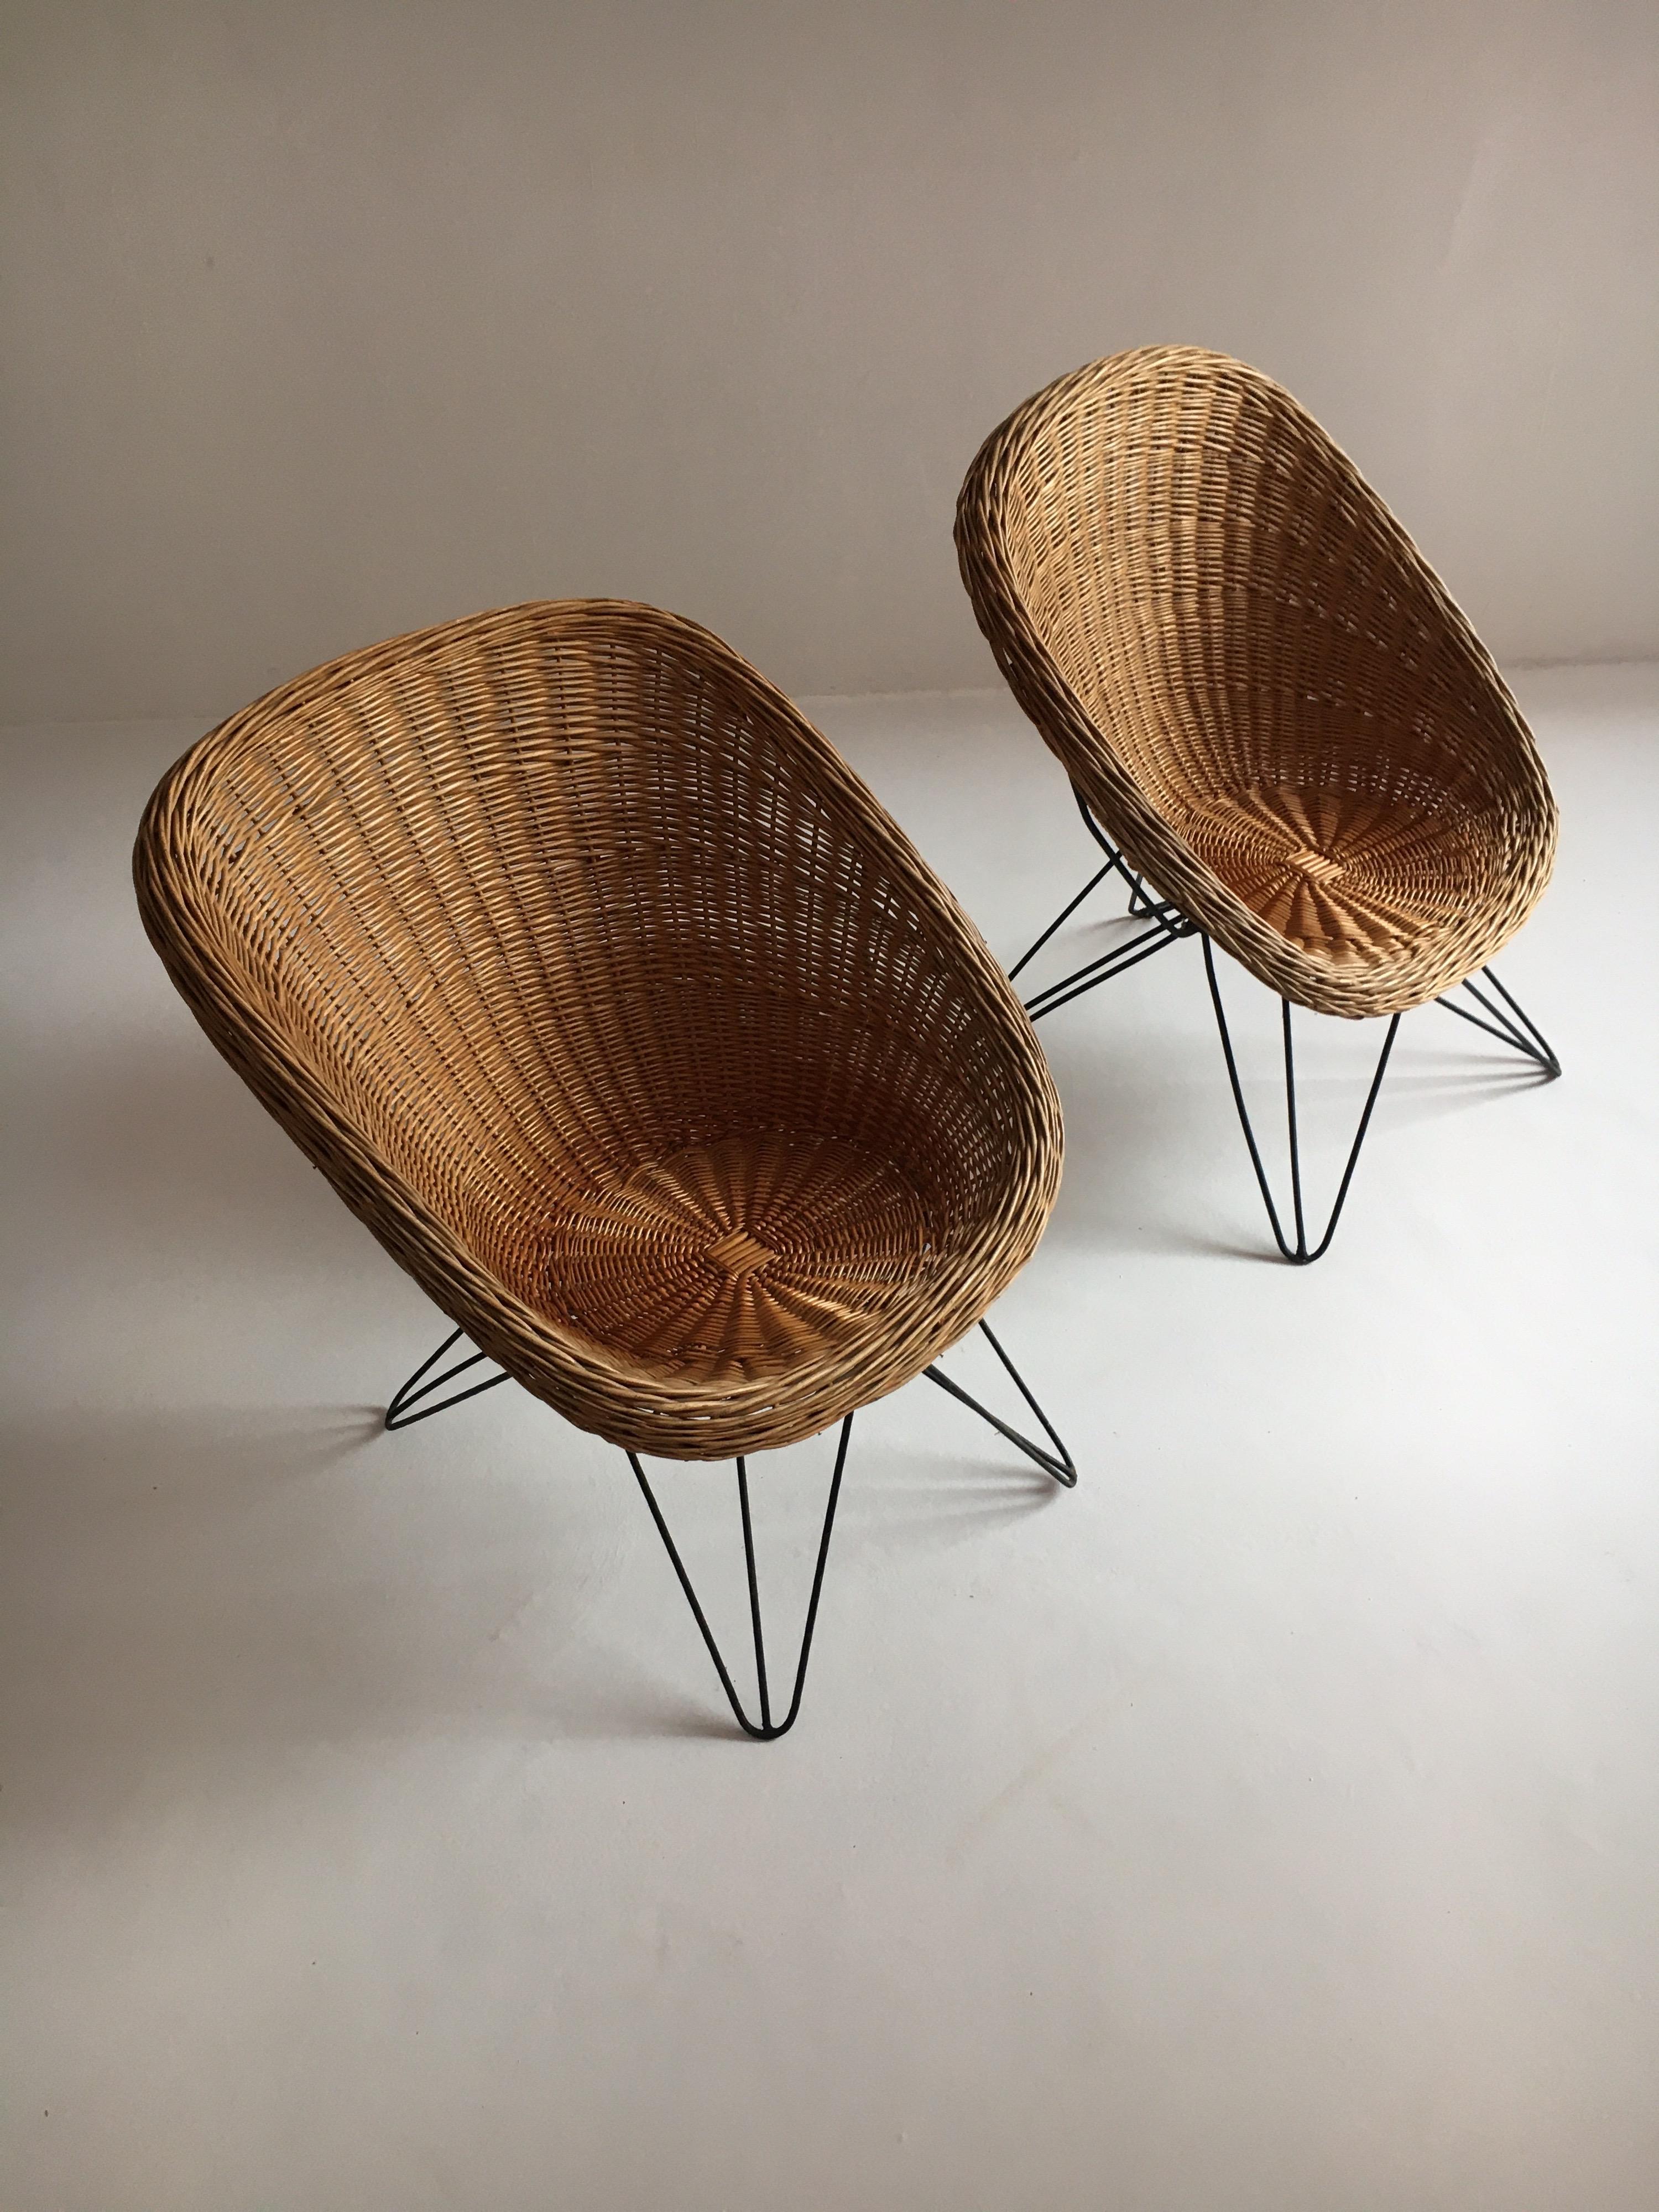 Mid-Century Modern wicker basket chairs hairpin legs, Austria, 1950s.